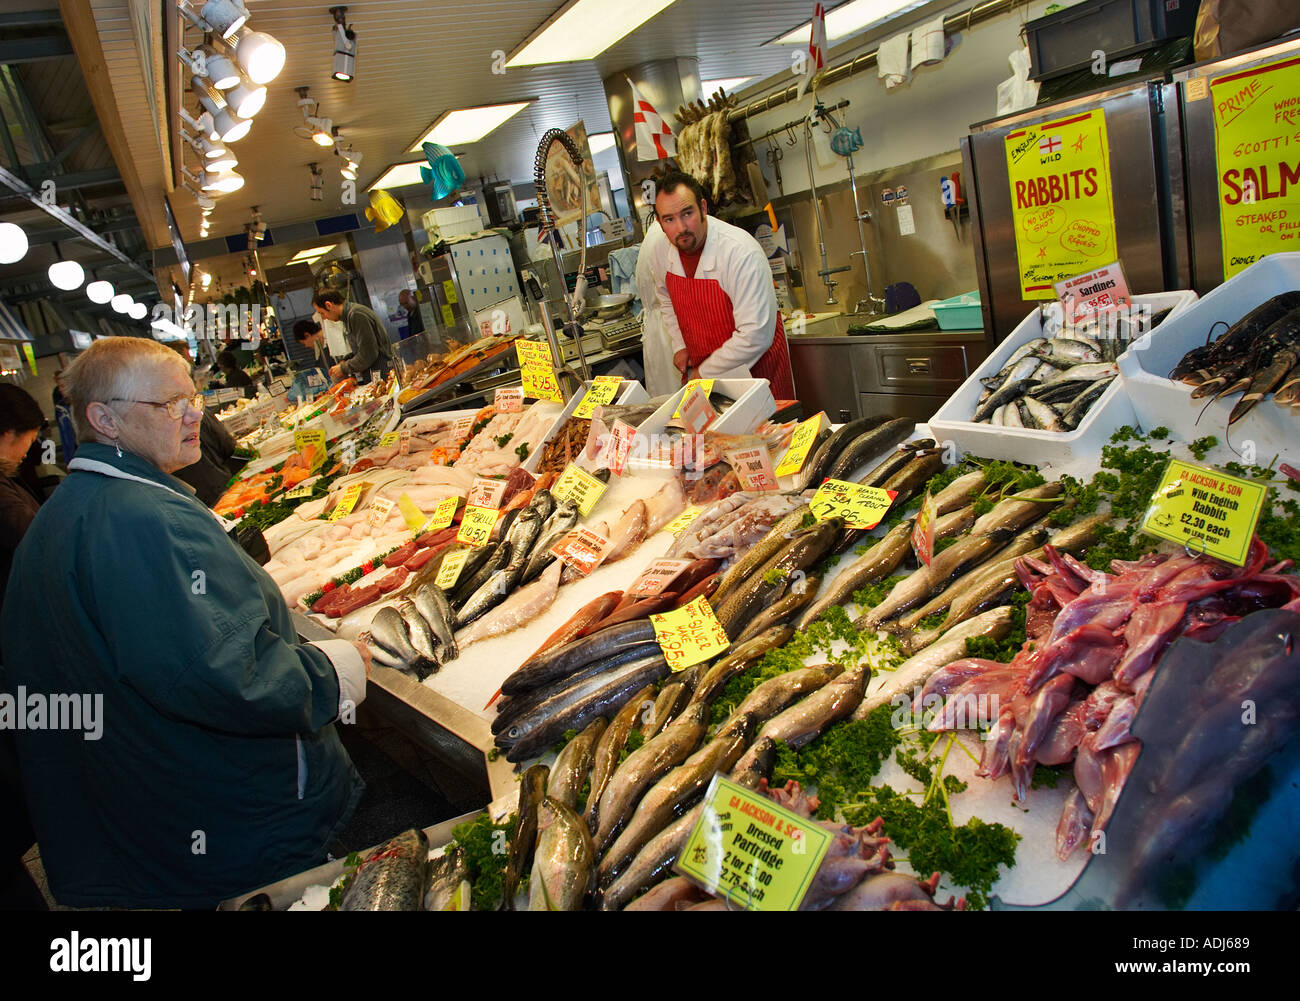 Market stall selling fresh fish, UK Stock Photo